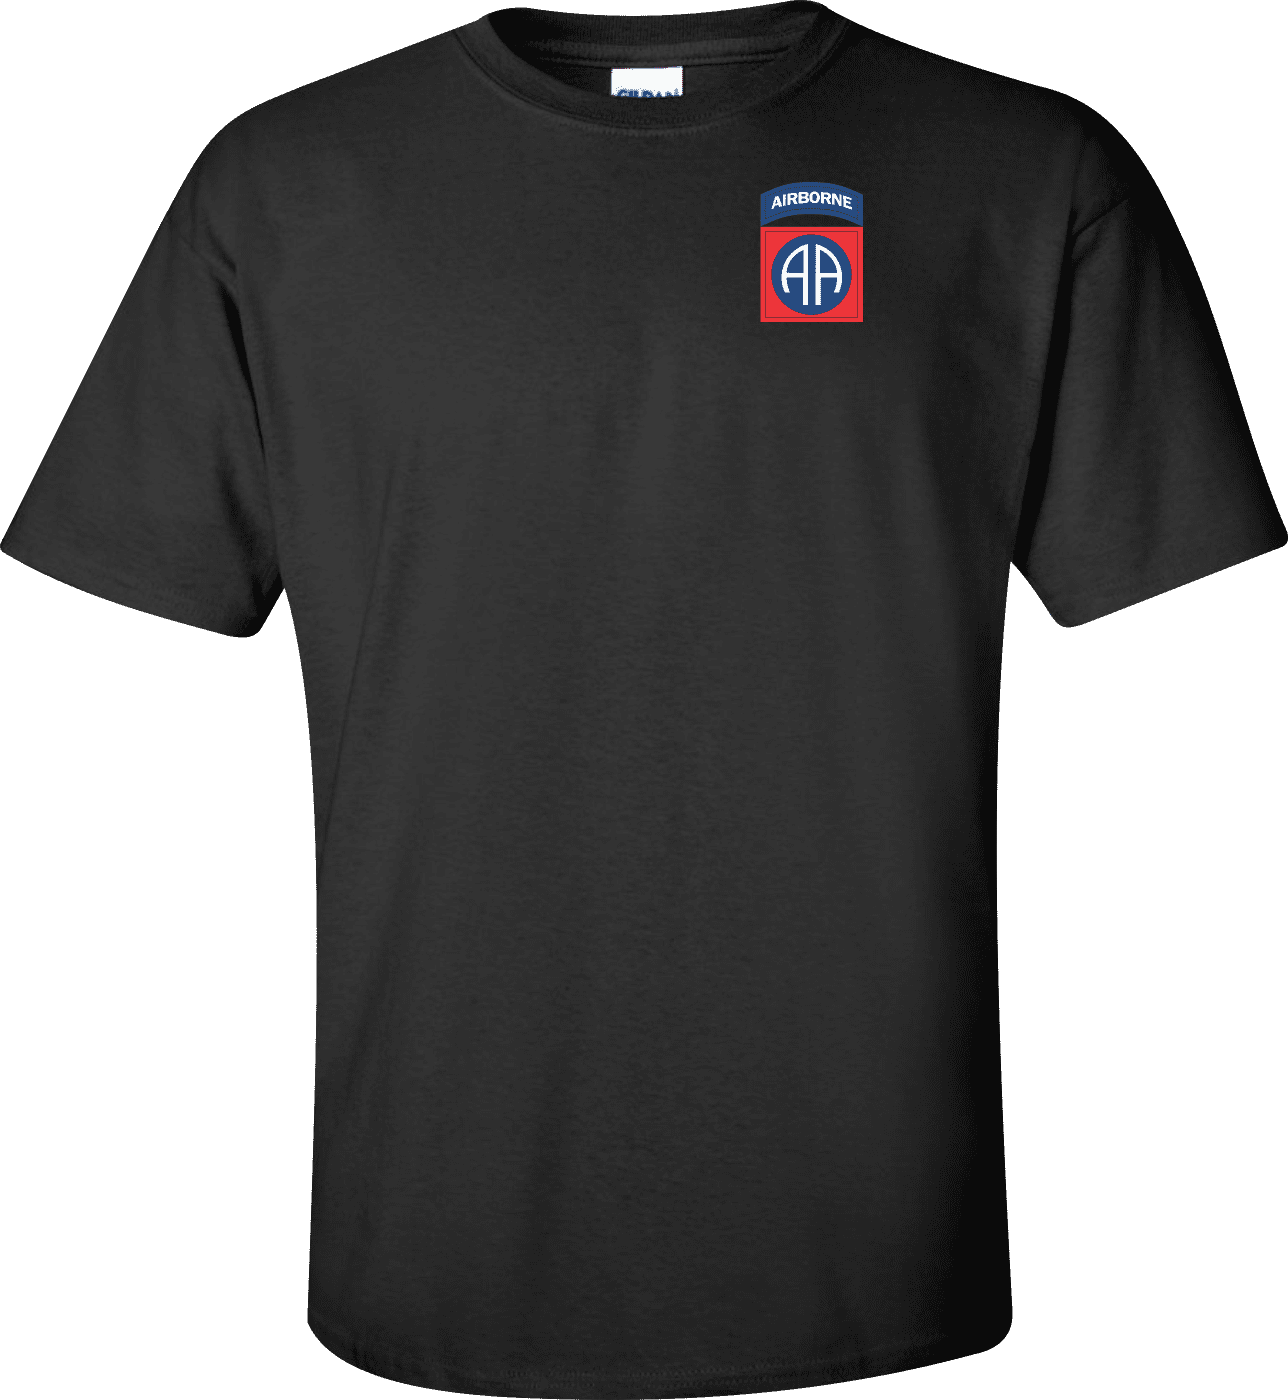 MilitaryBest - U.S. Army 82nd Airborne Division T-shirt - Walmart.com ...